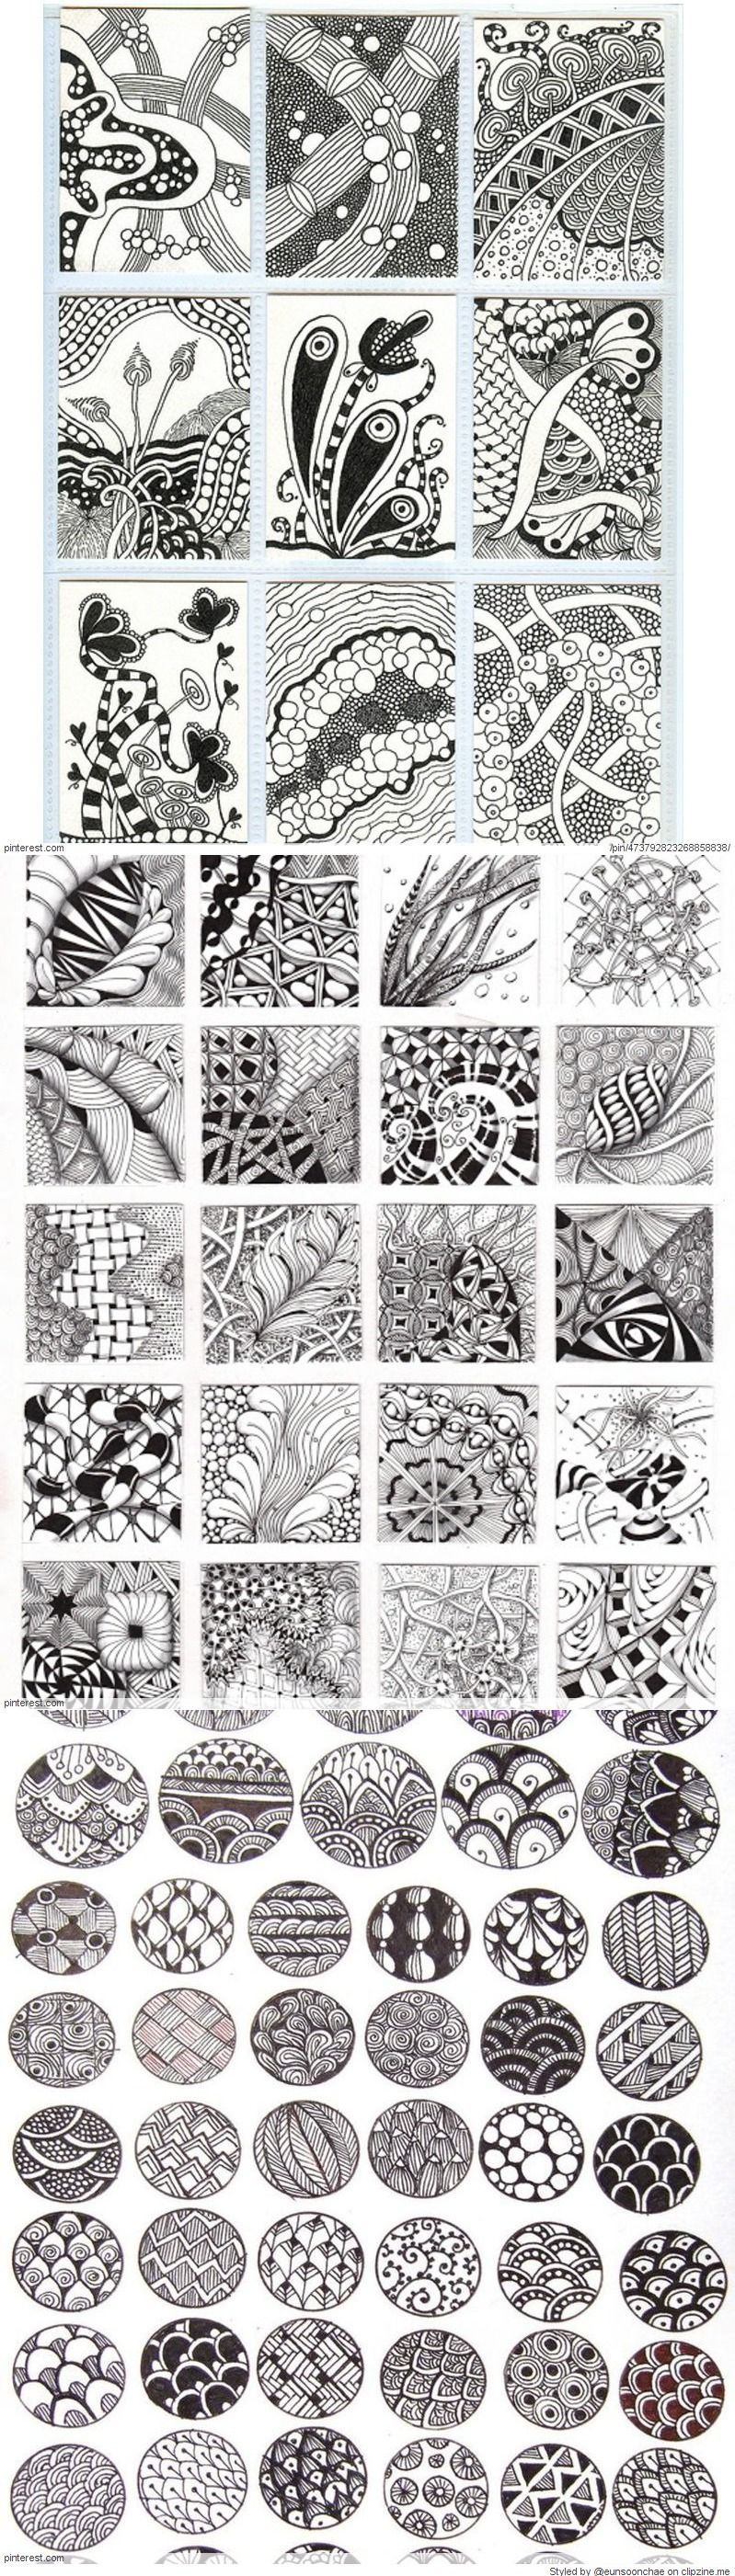 Zentangle Patterns & Ideas